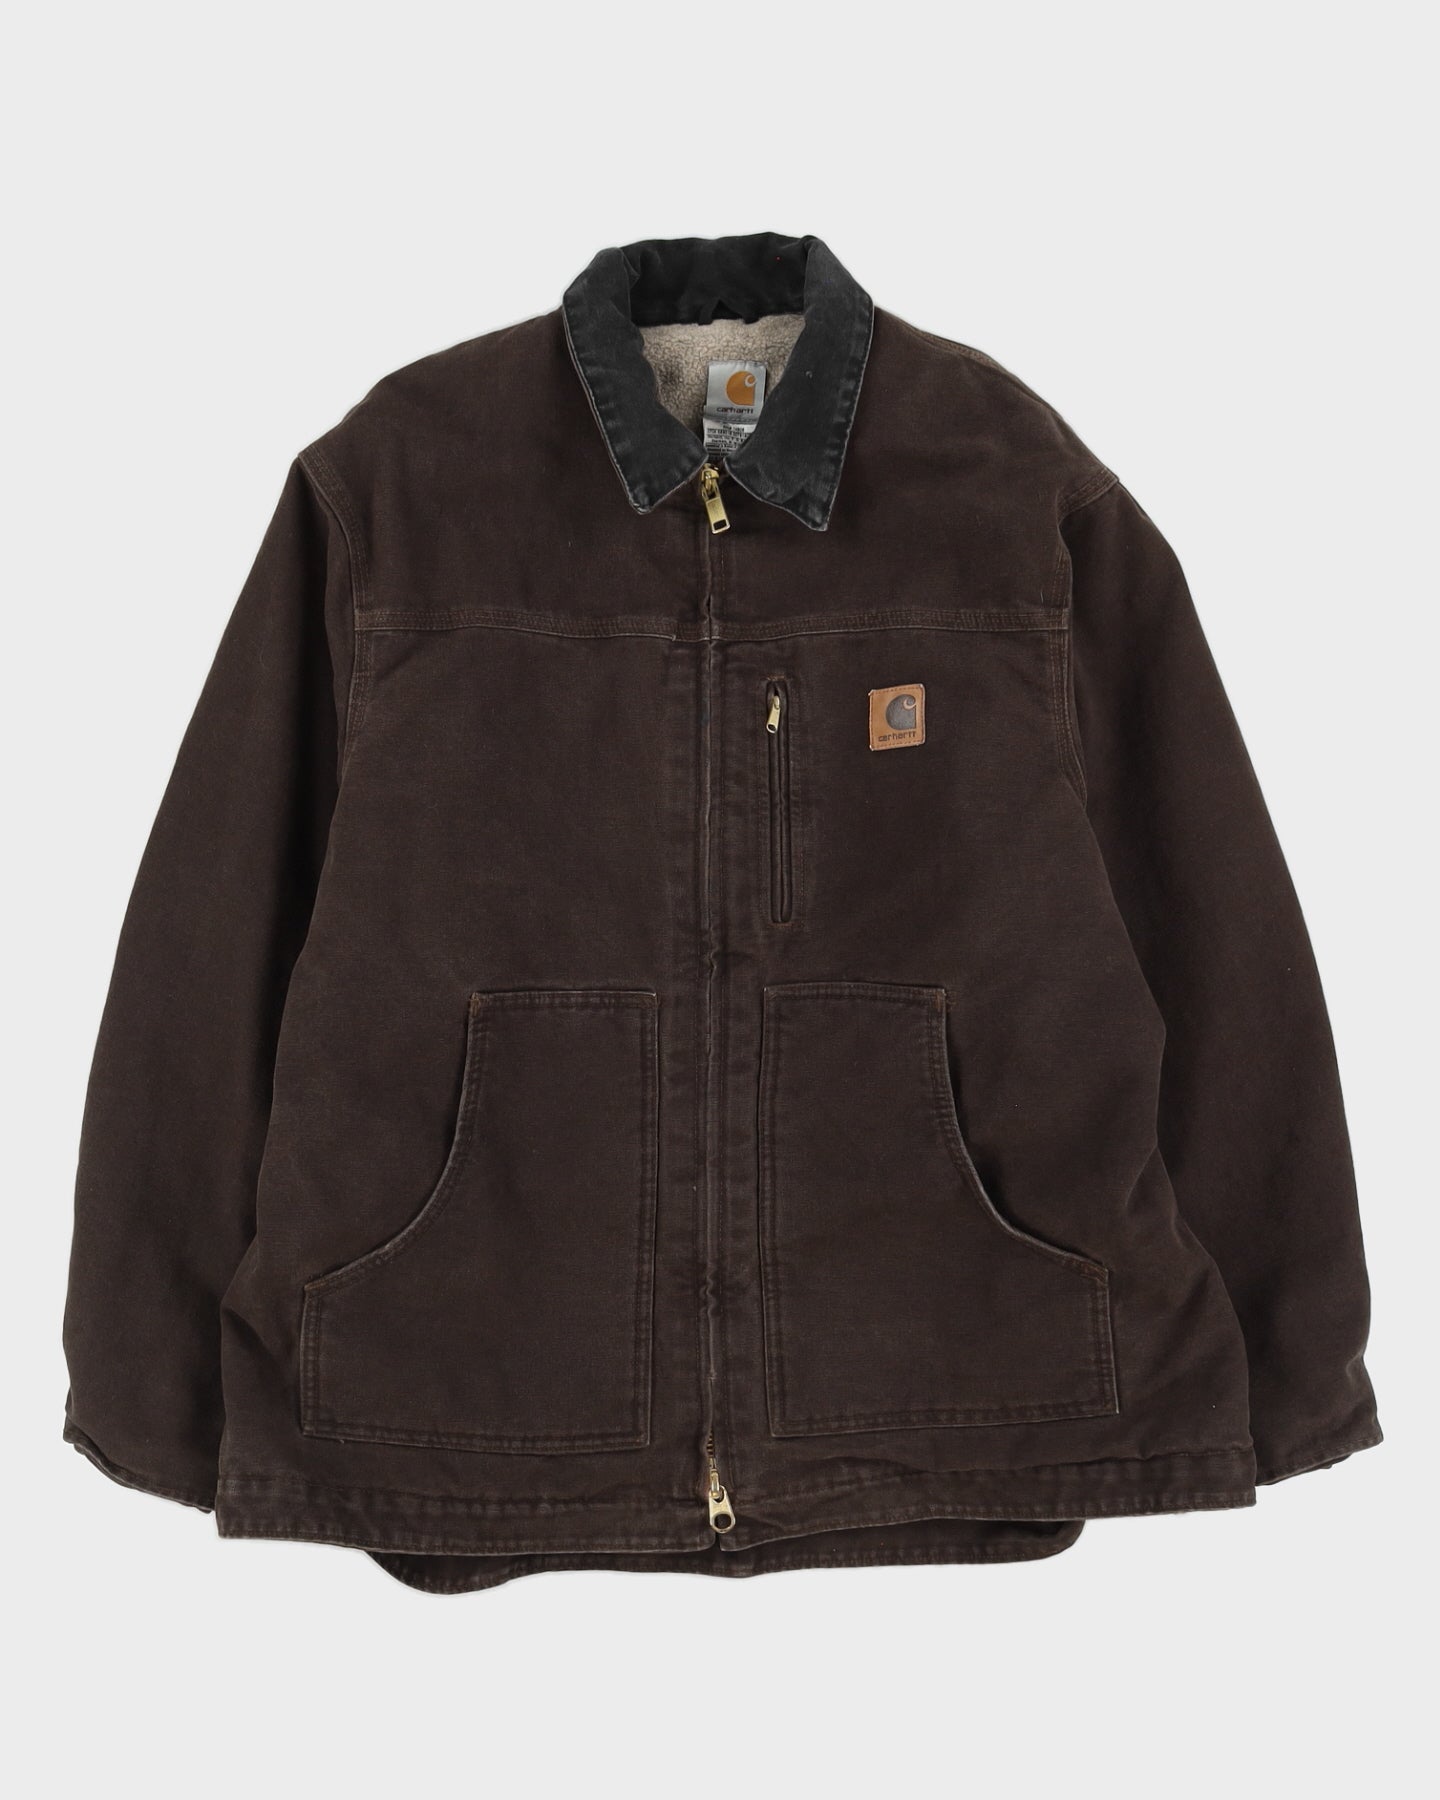 00s Carhartt Brown Workwear Fleece Lined Jacket - XL